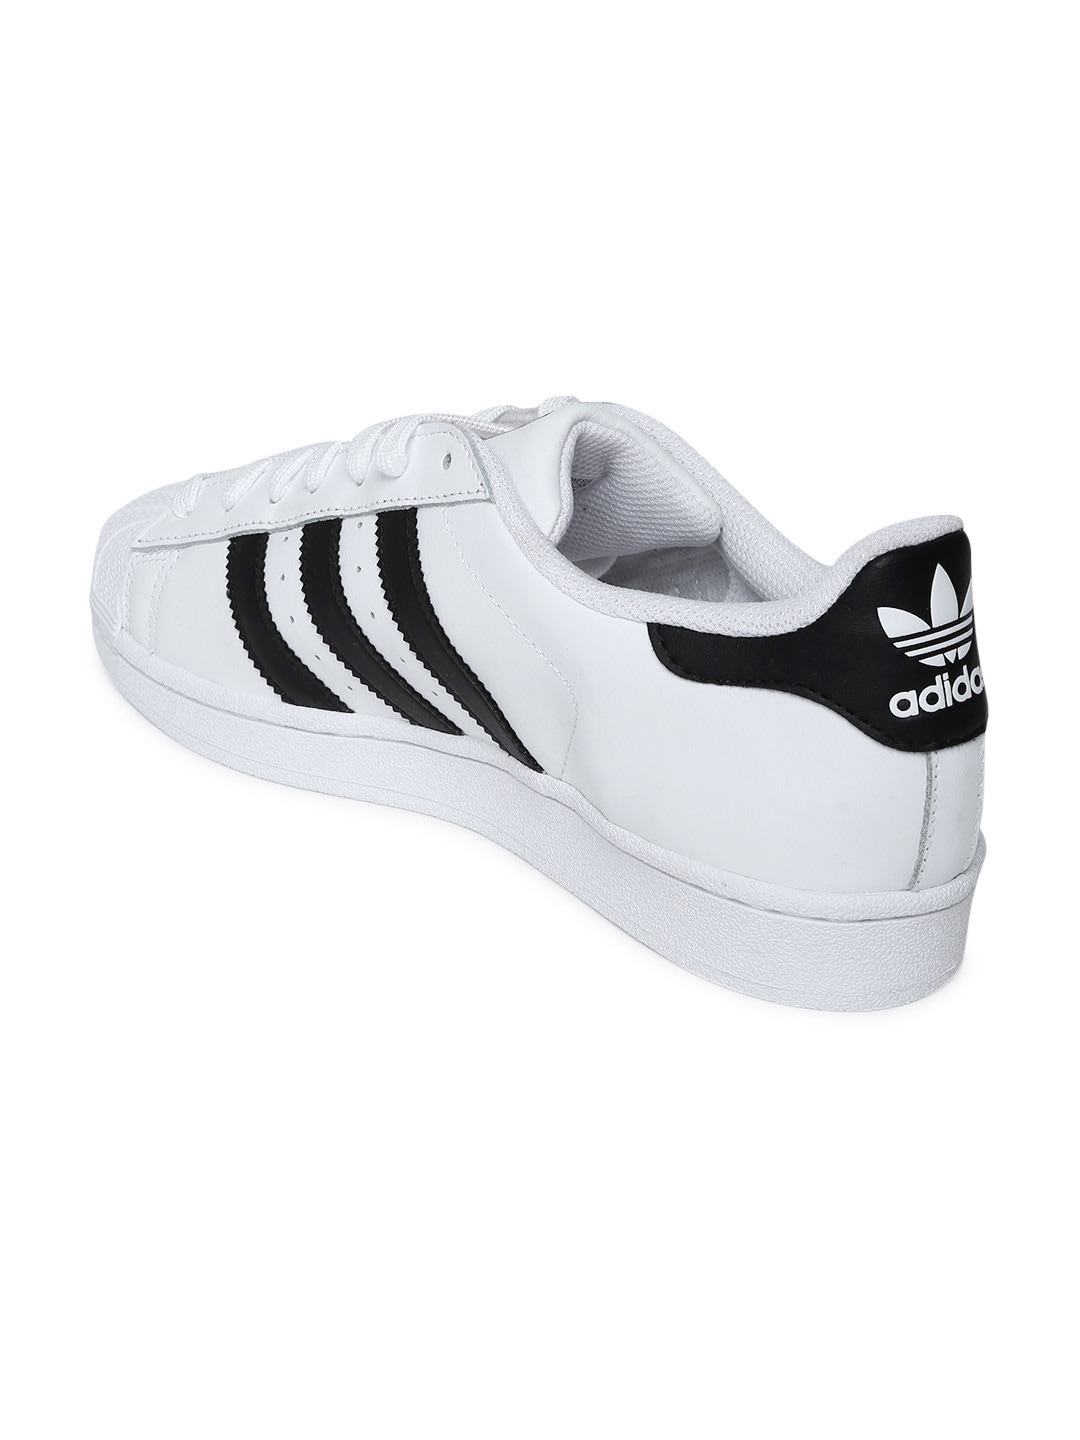 adidas shoes white colour